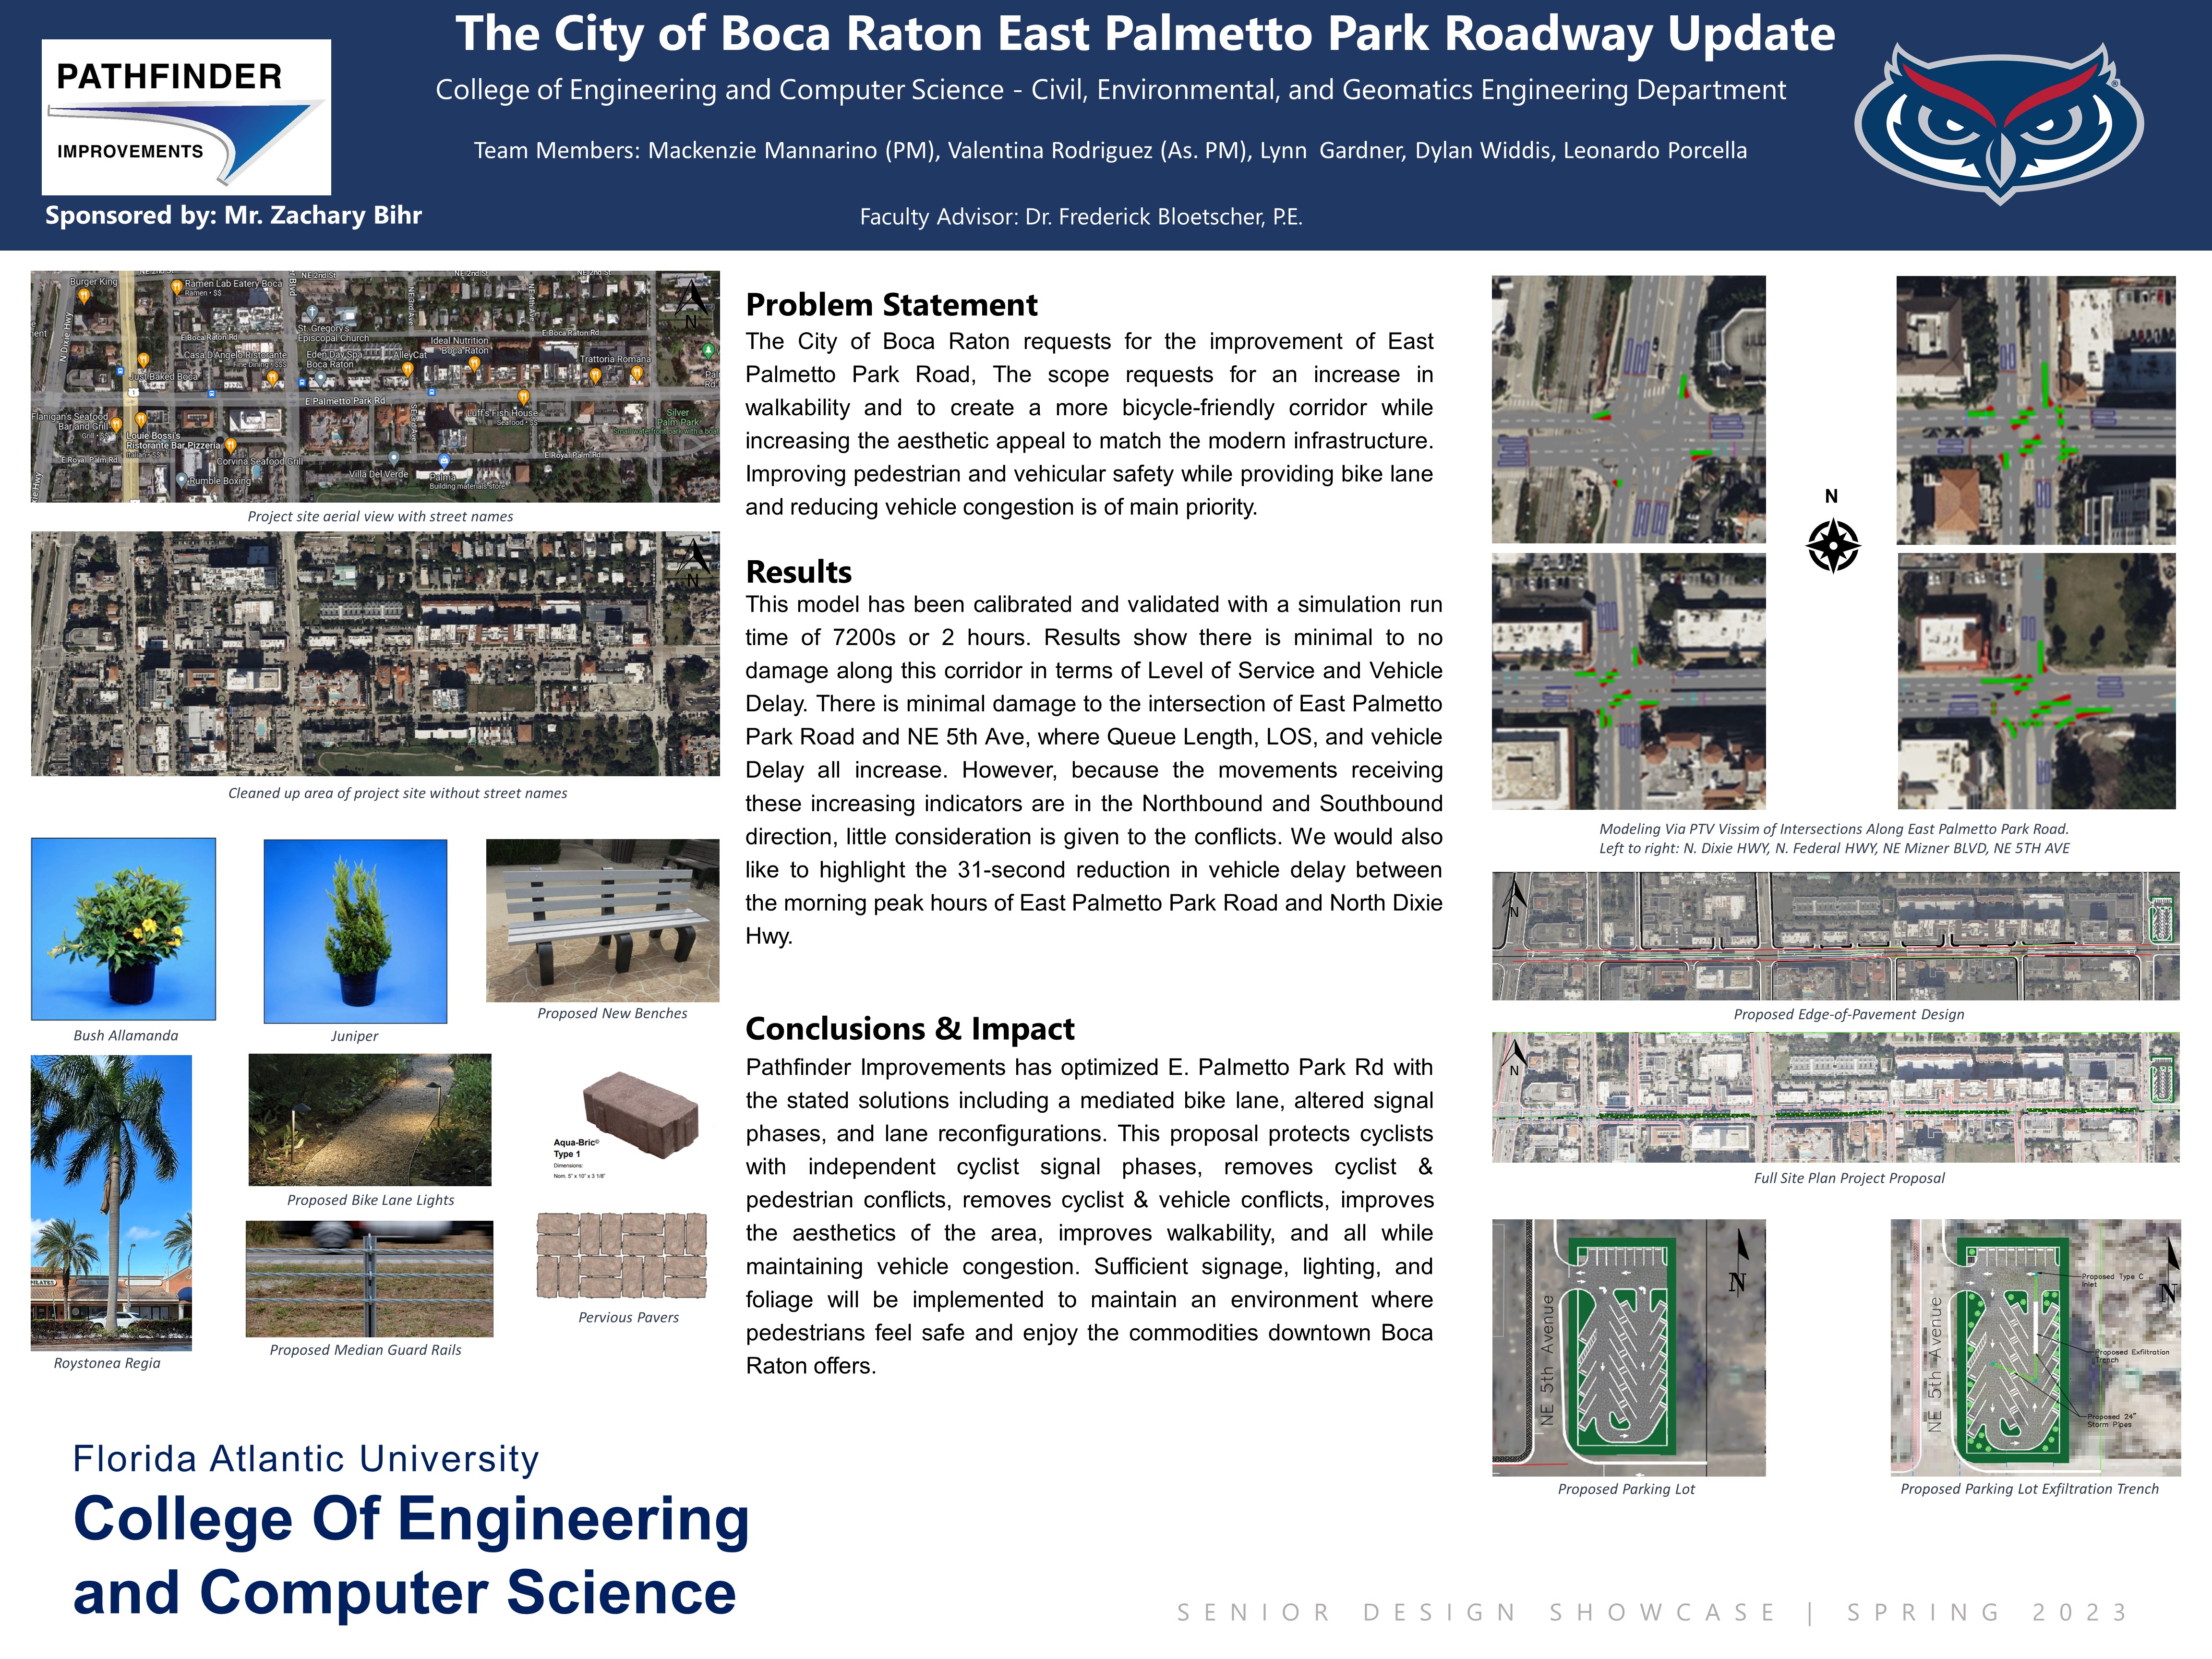 The City of Boca Raton East Palmetto Park Roadway Update (Pathfinder Improvements)